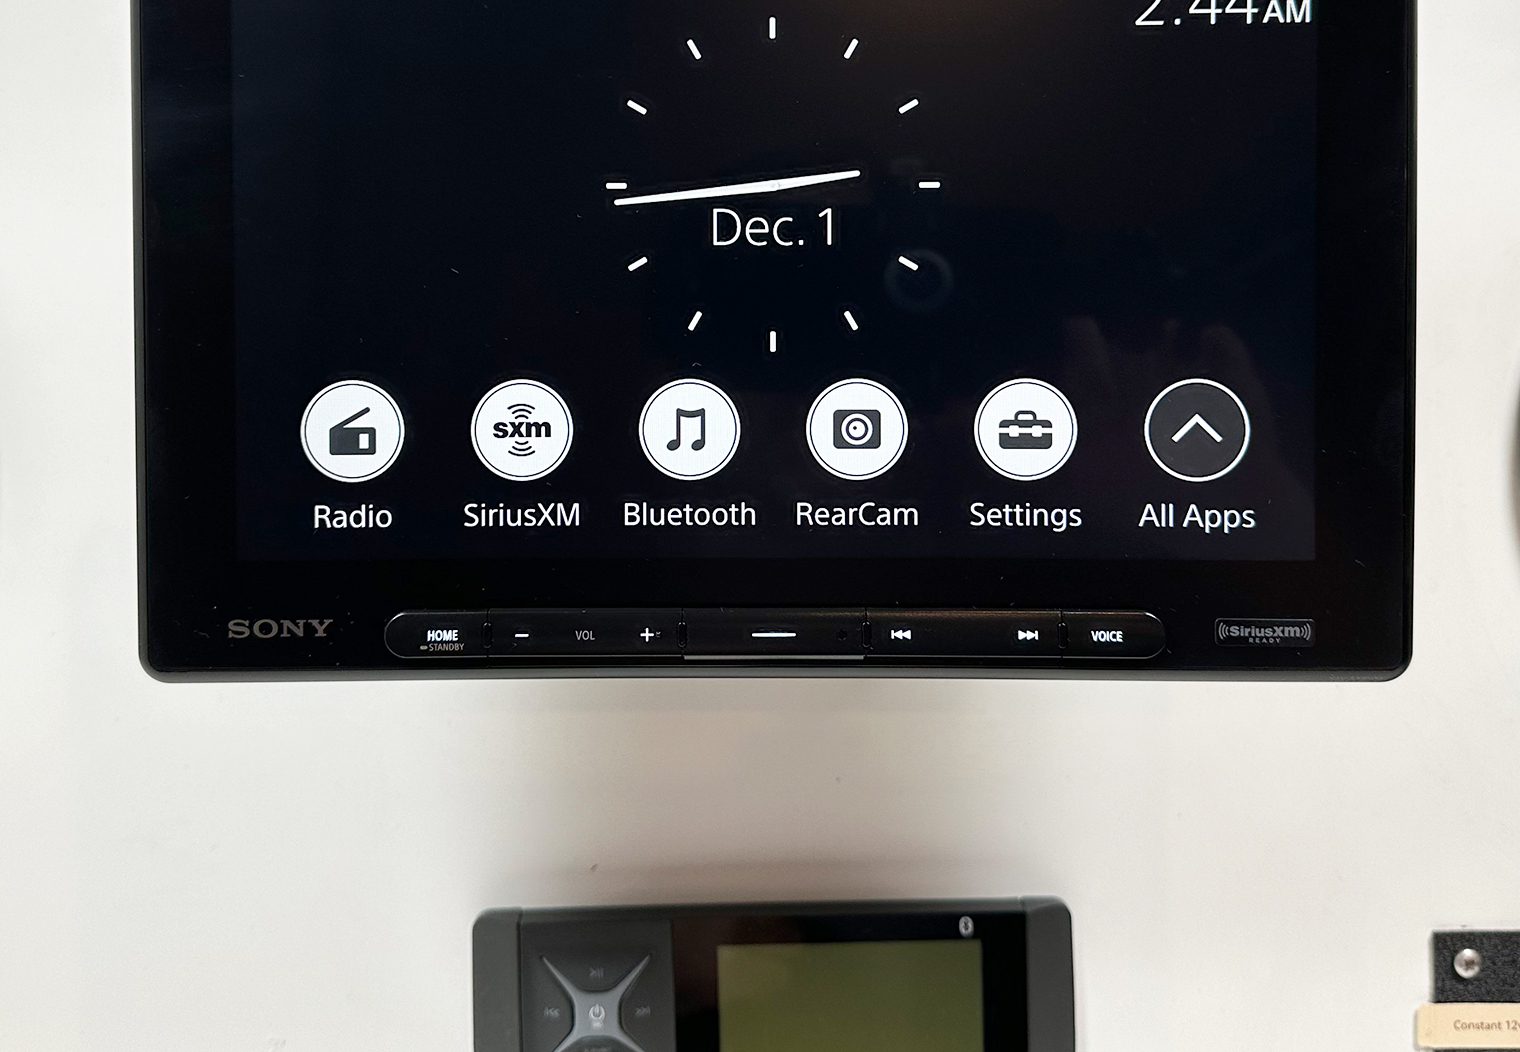 Sony XAV-AX8500 quick menu